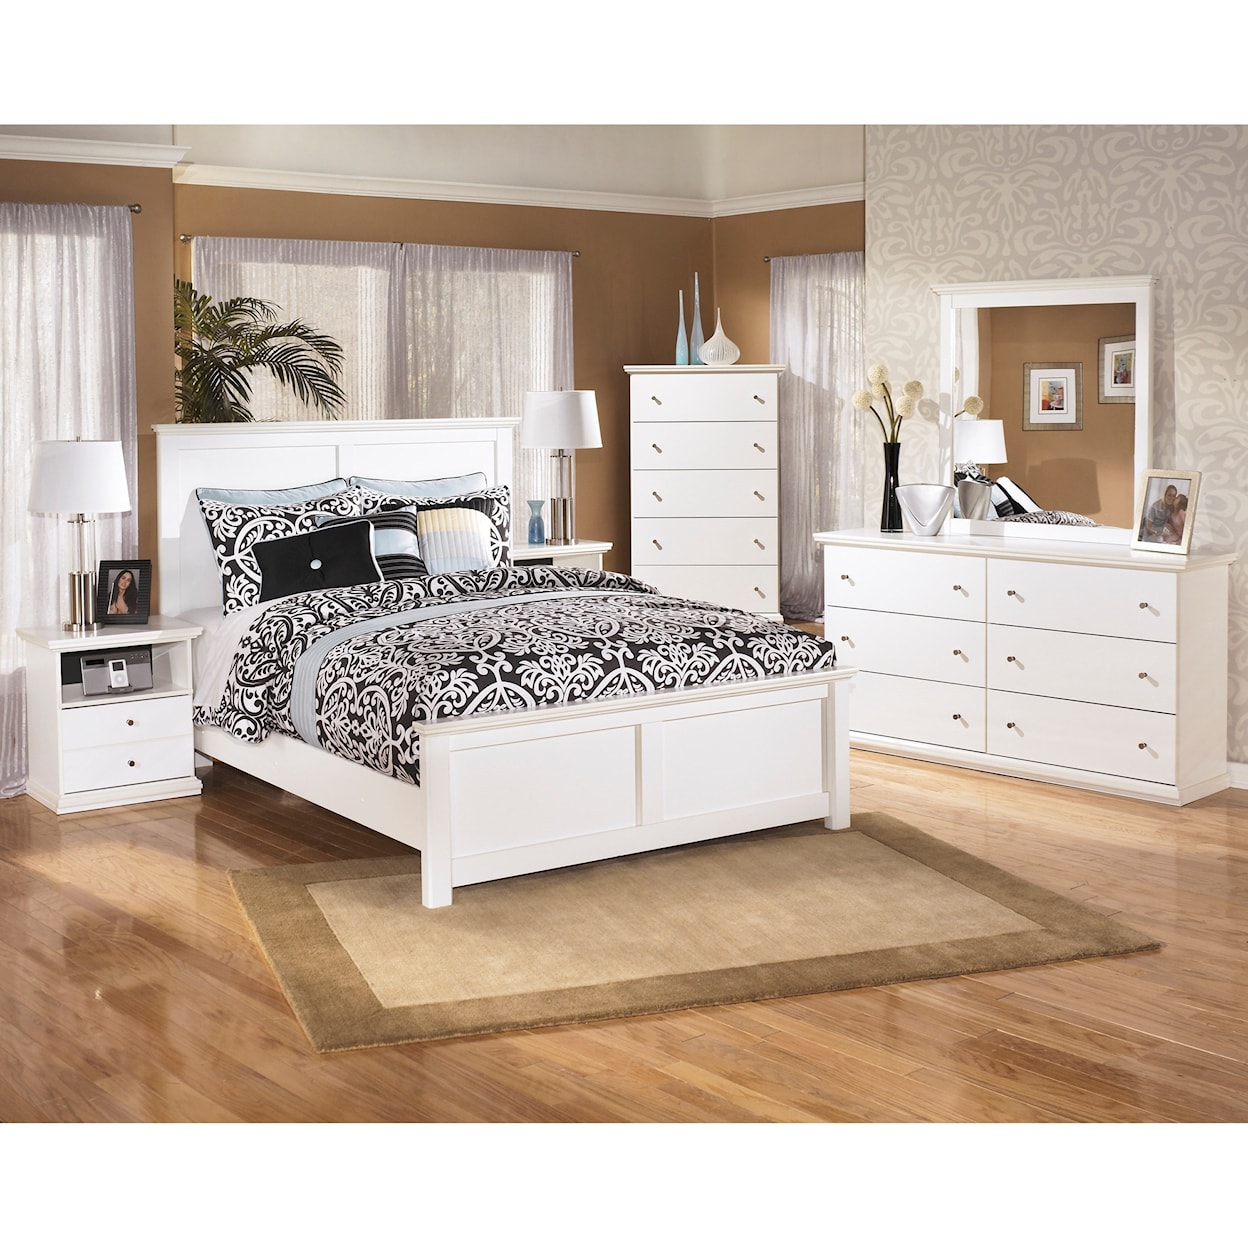 Ashley Furniture Signature Design Bostwick Shoals Queen Bedroom Group